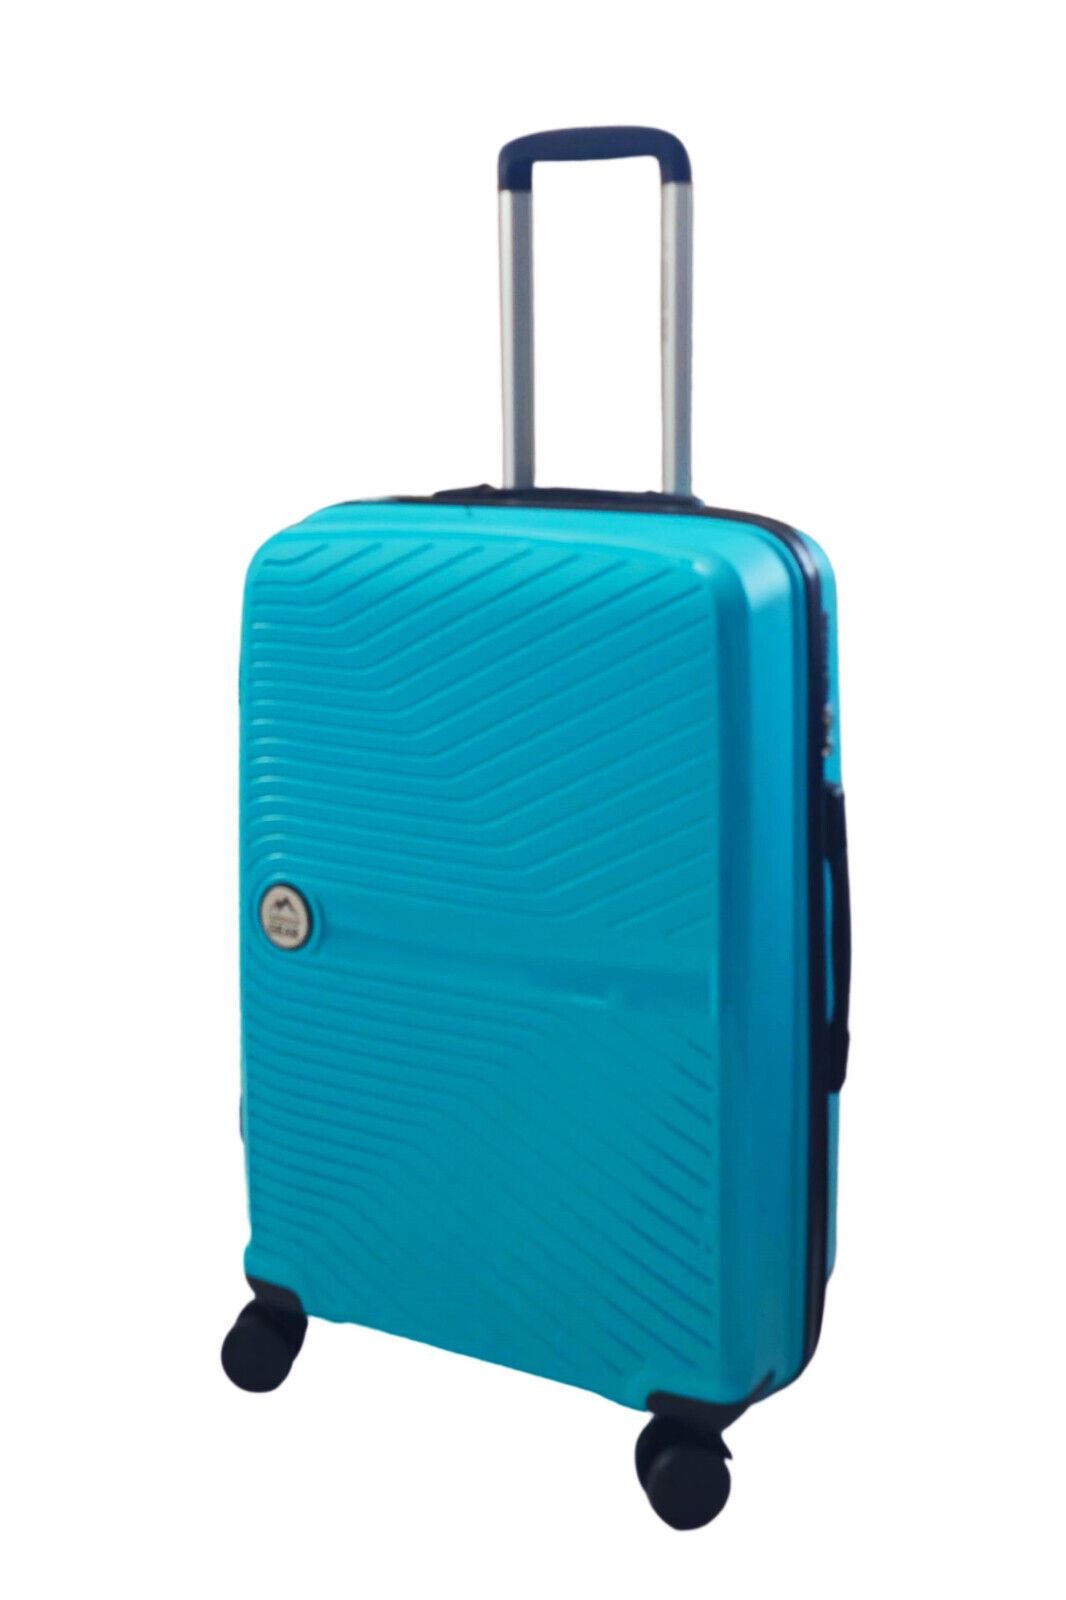 Abbeville Medium Hard Shell Suitcase in Mint